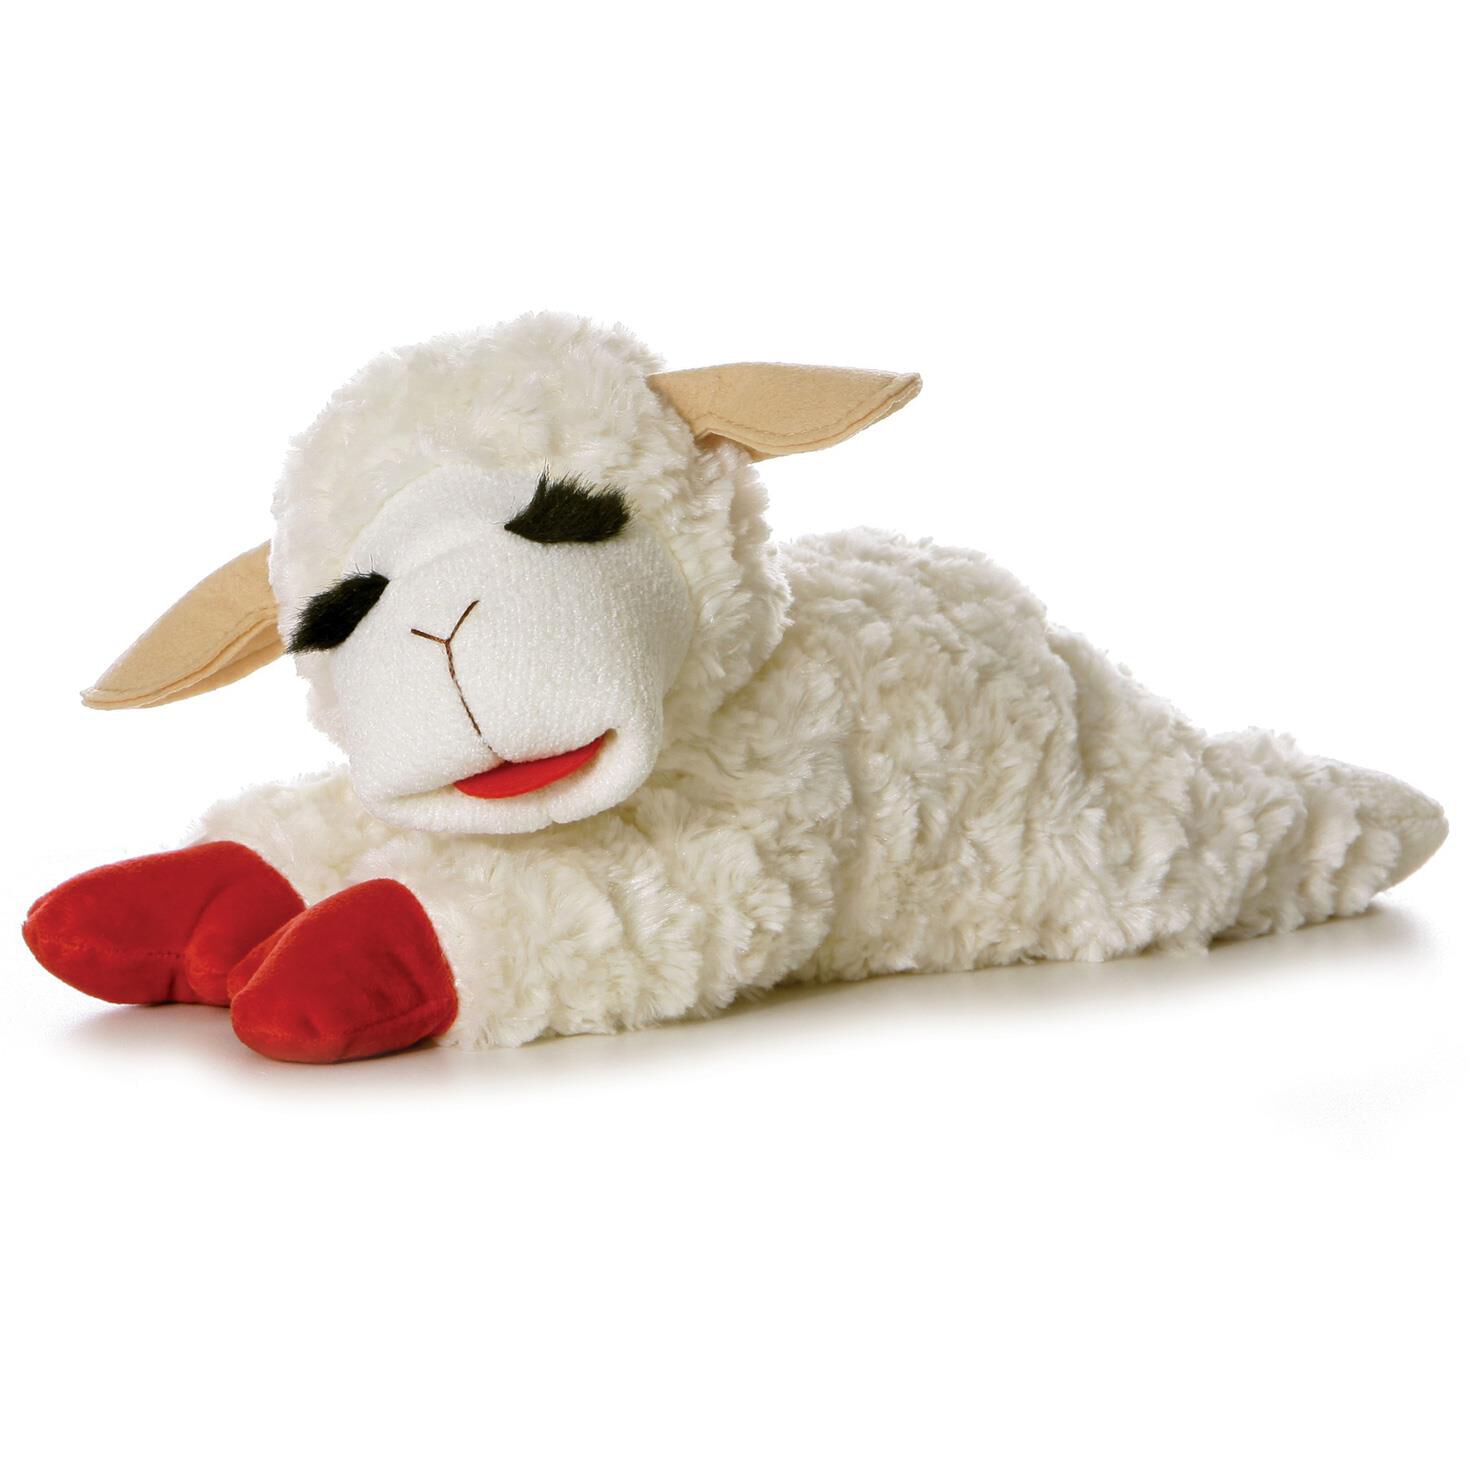 lamb chop stuffed animal